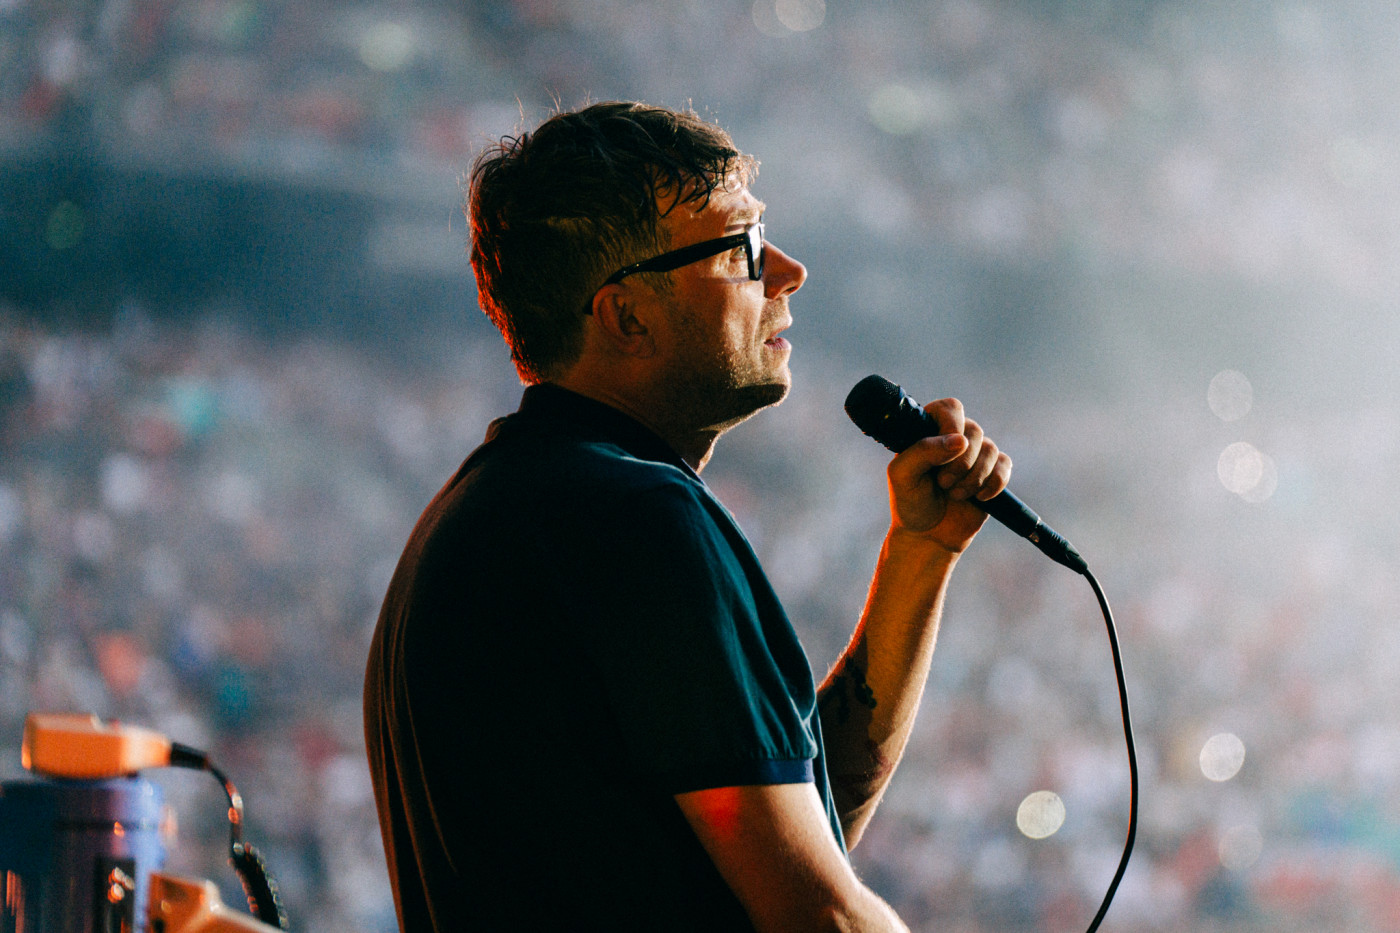 Blur @ Wembley Stadium (Tom Pallant)